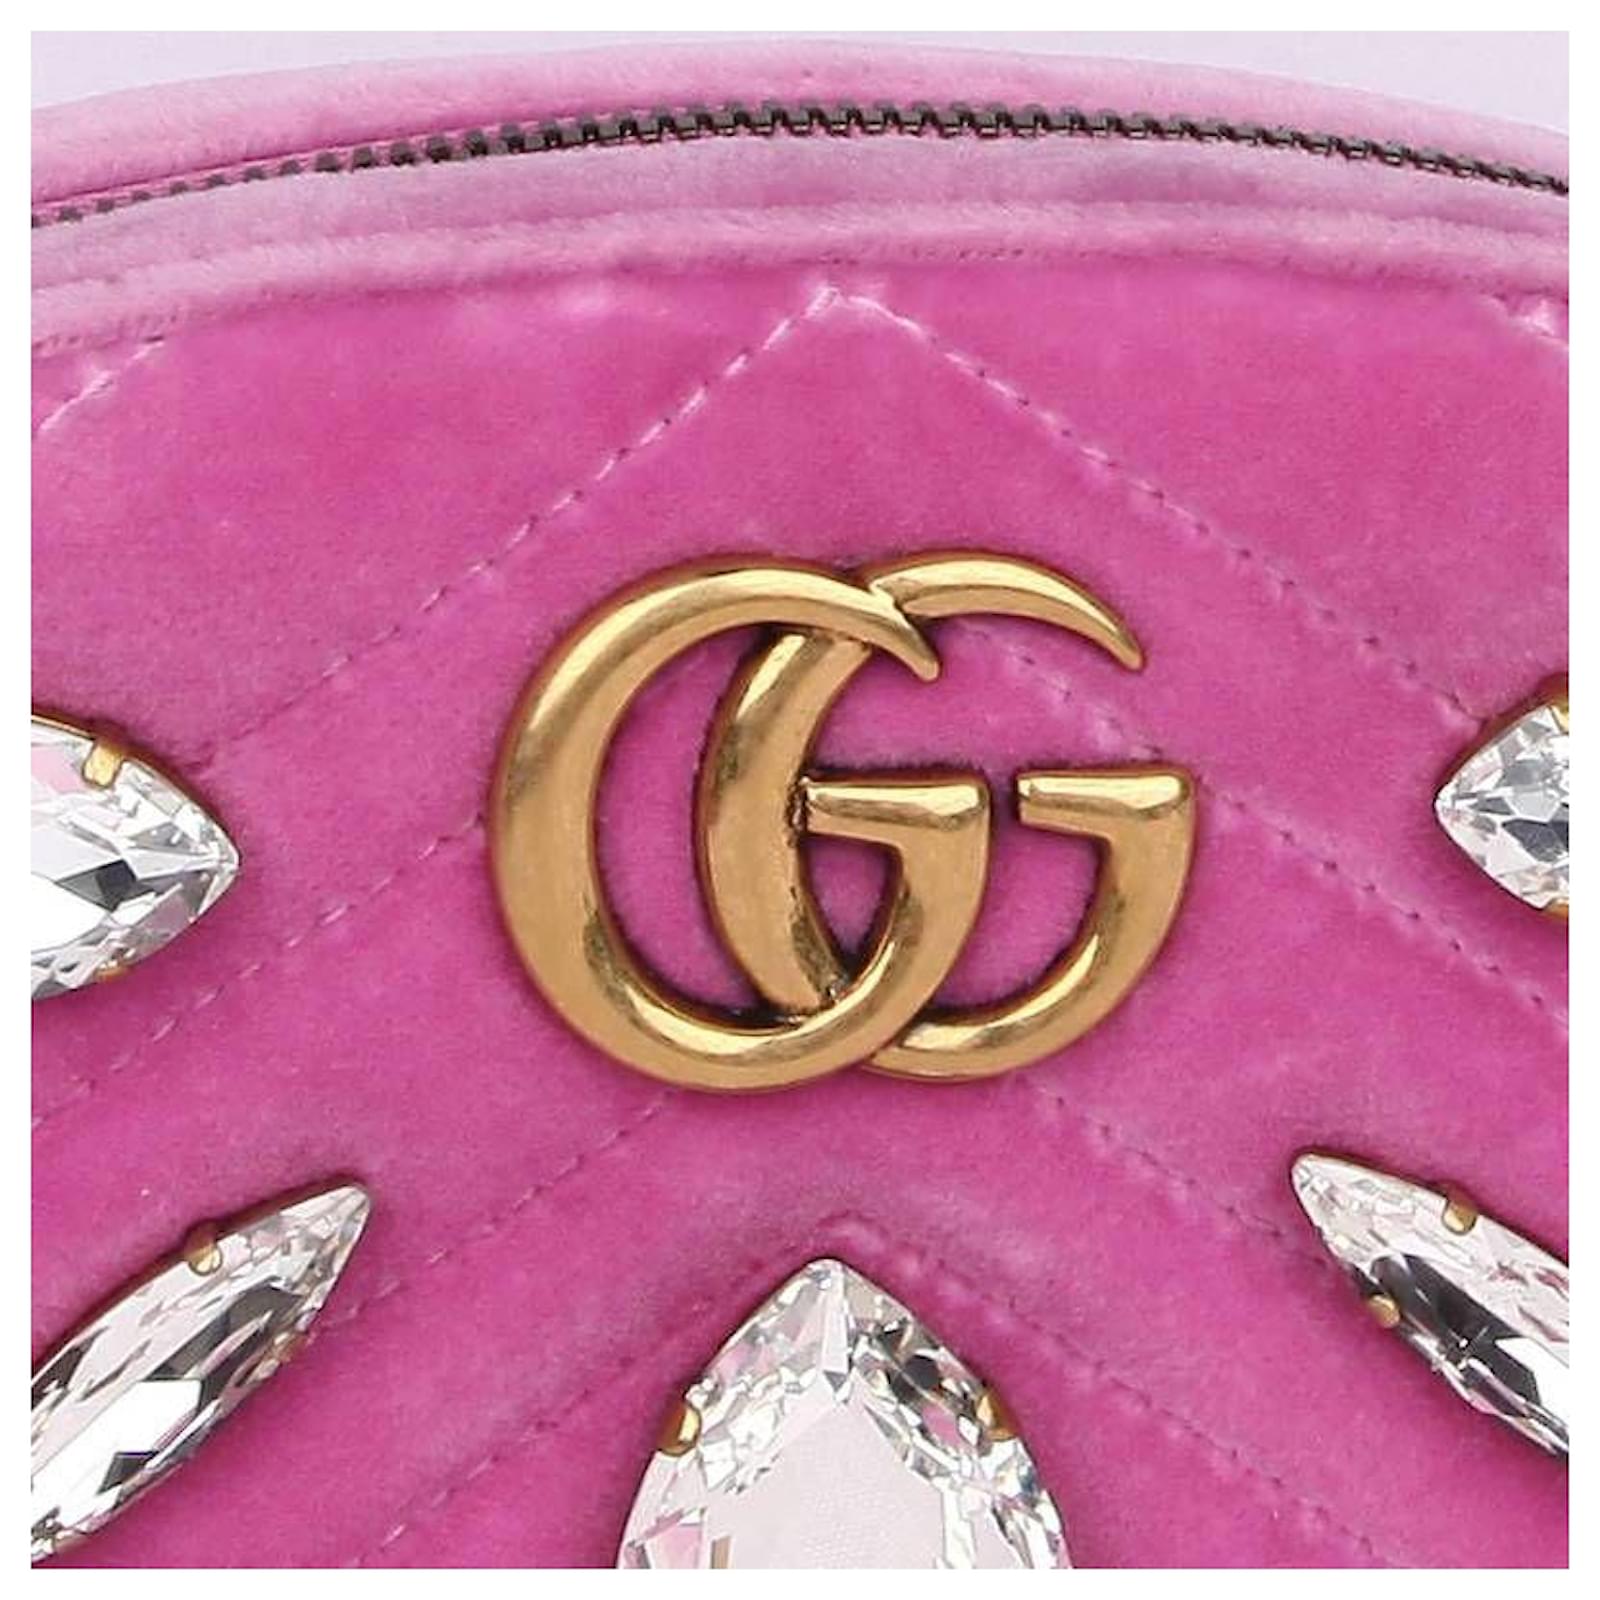 Gucci Marmont Belt Bag Pink Velvet With Crystals